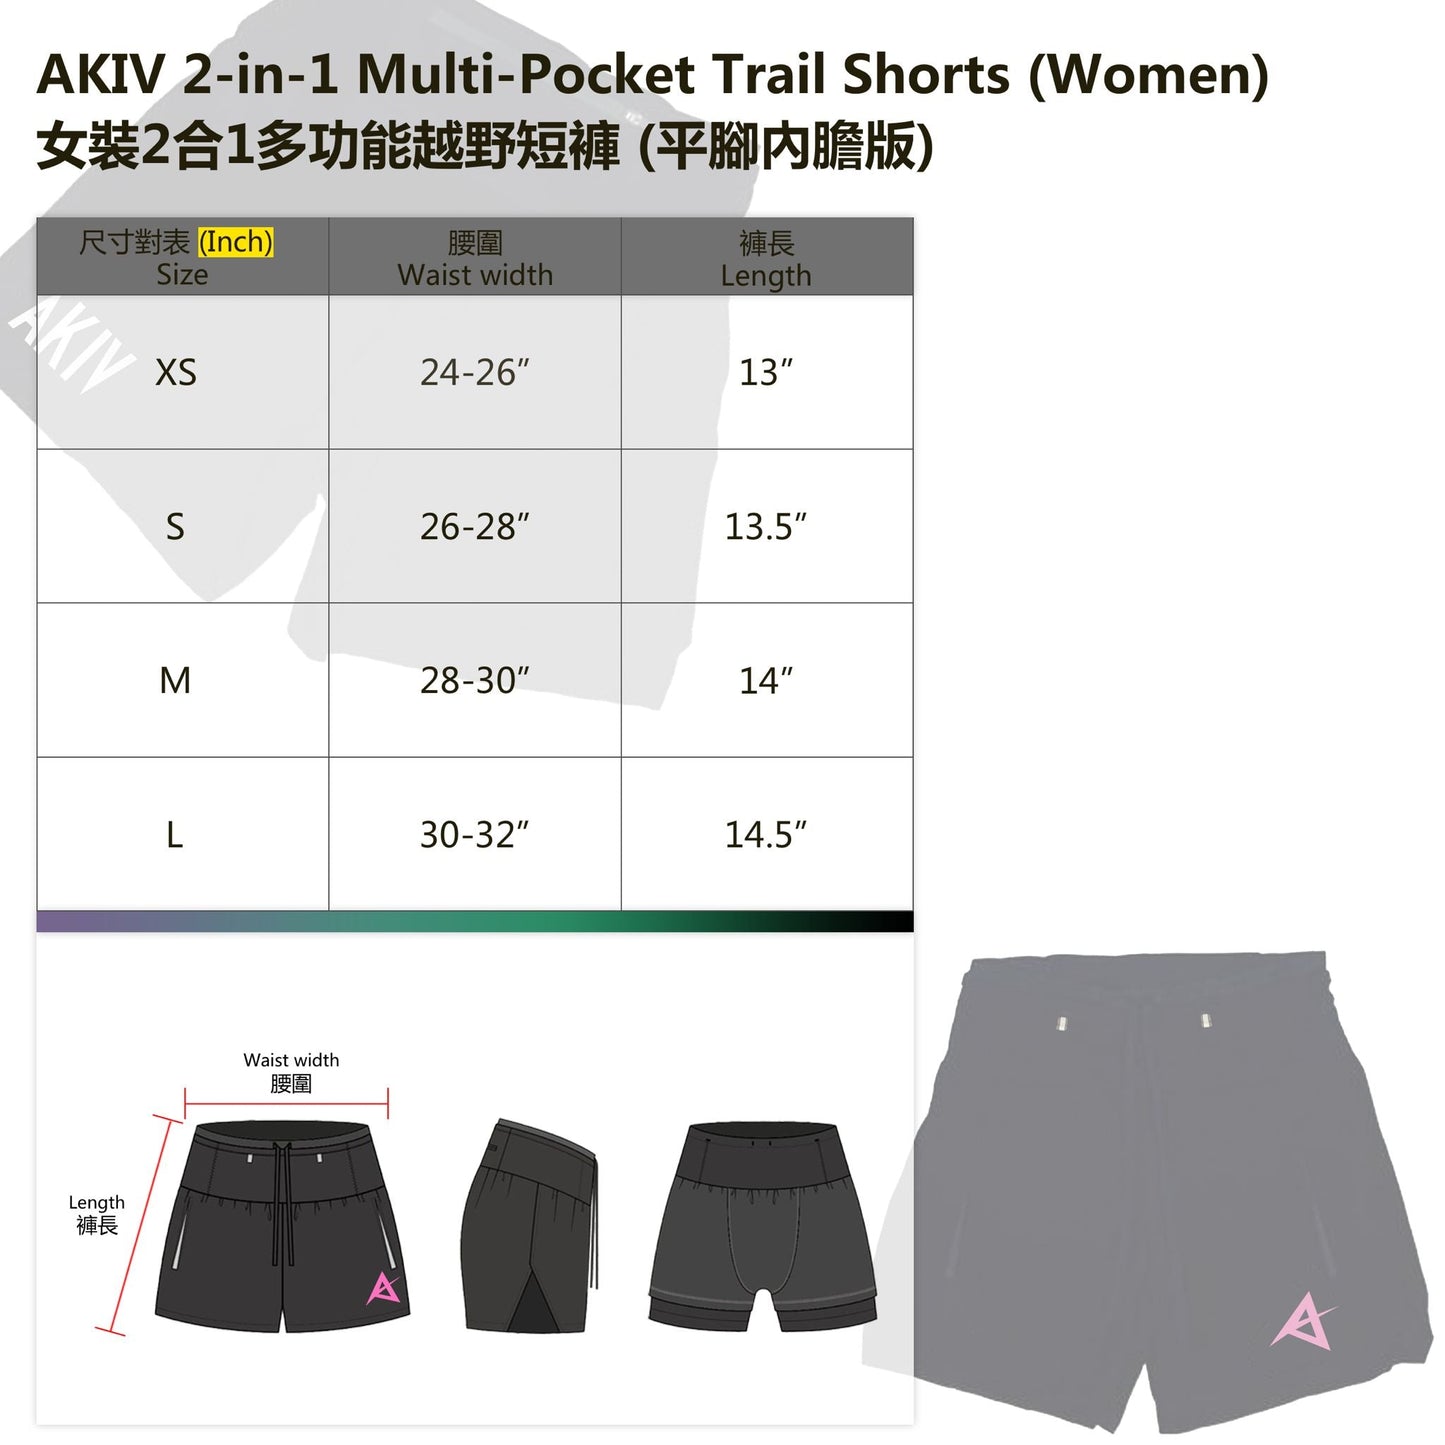 【Trail】 AKIV 2-in-1 TRAIL RUNNING SHORTS (Women) - PINK